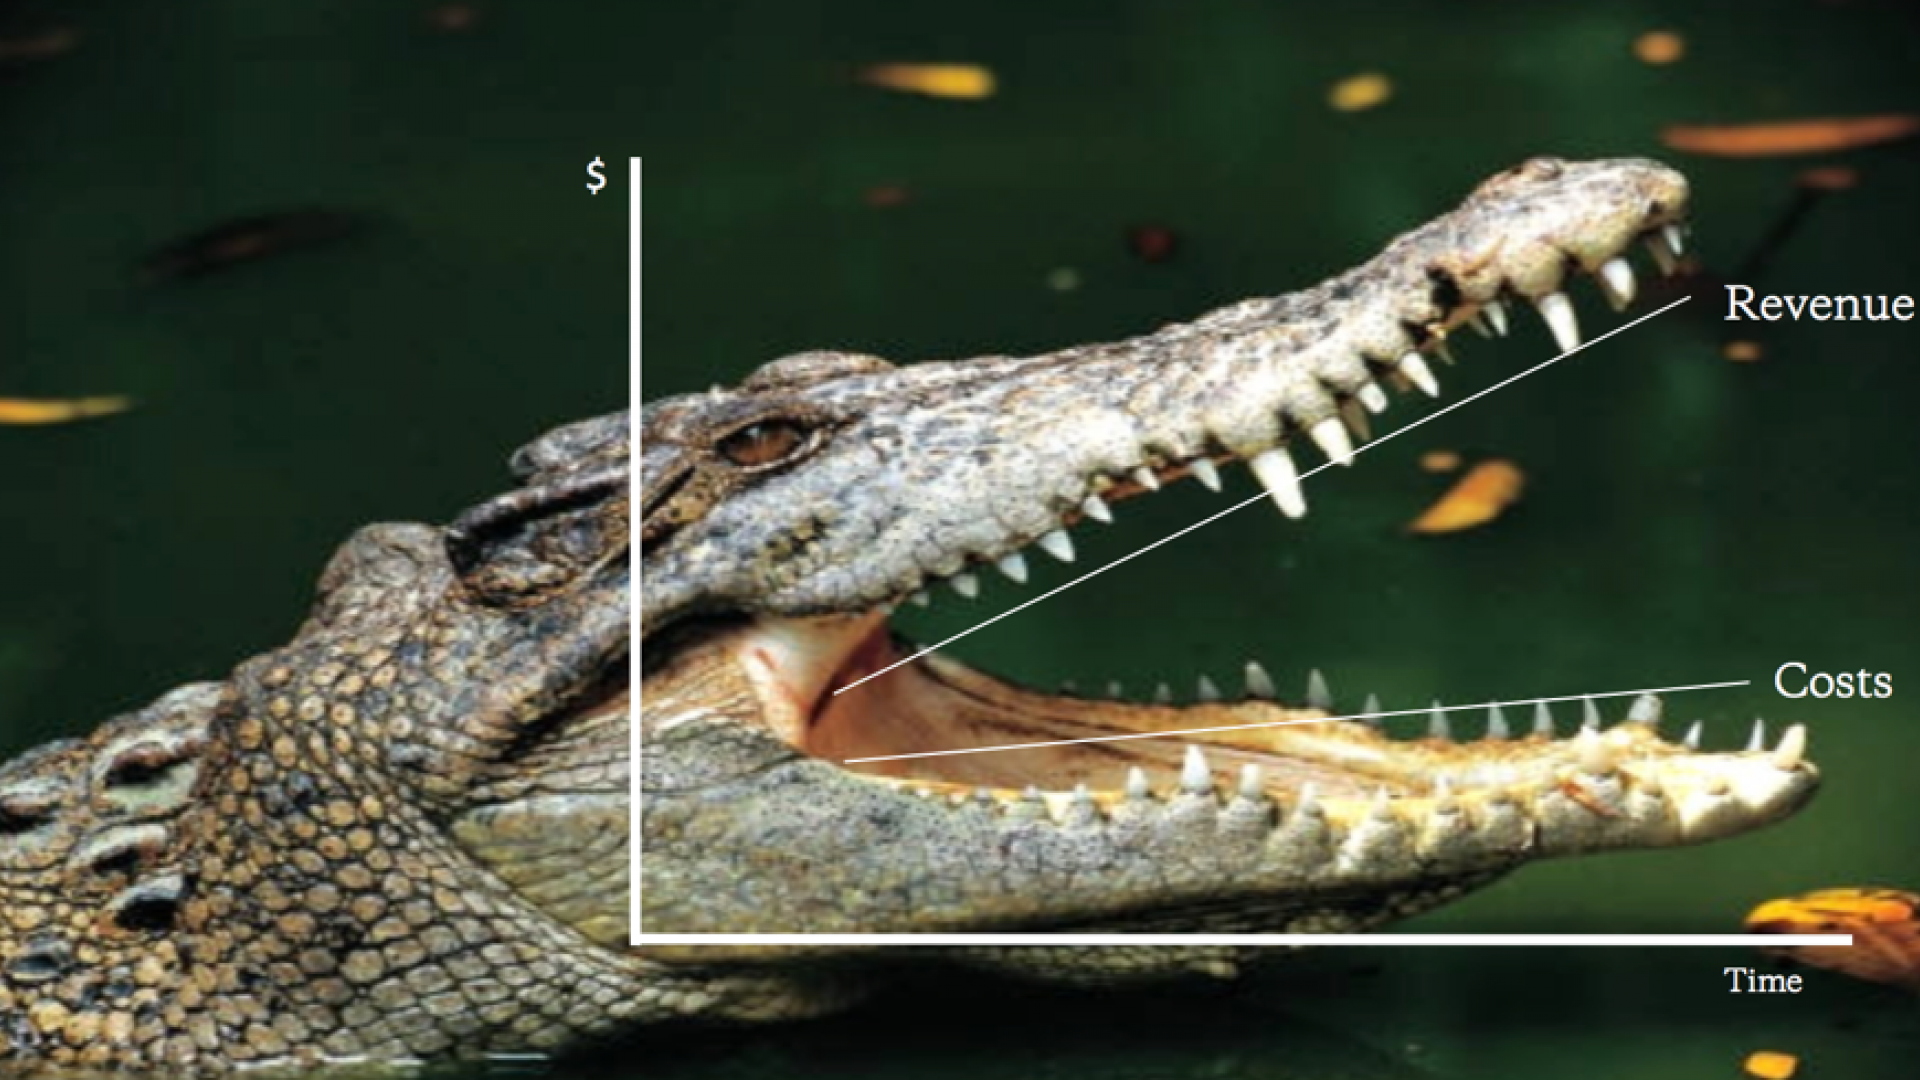 Crocodlie jaws